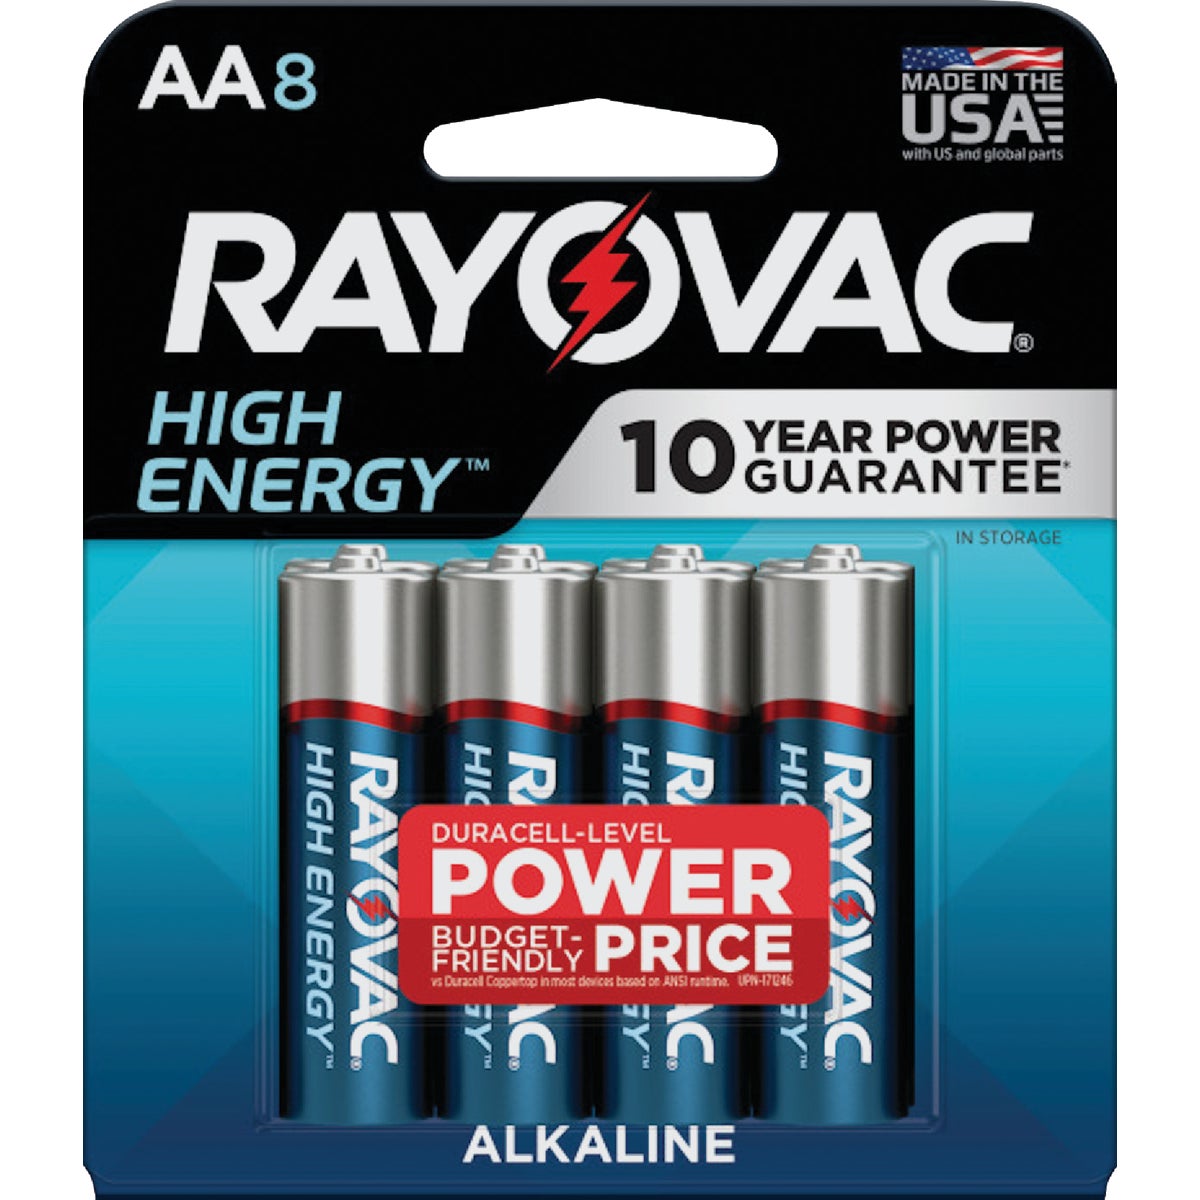 Rayovac High Energy AA Alkaline Battery (8-Pack)